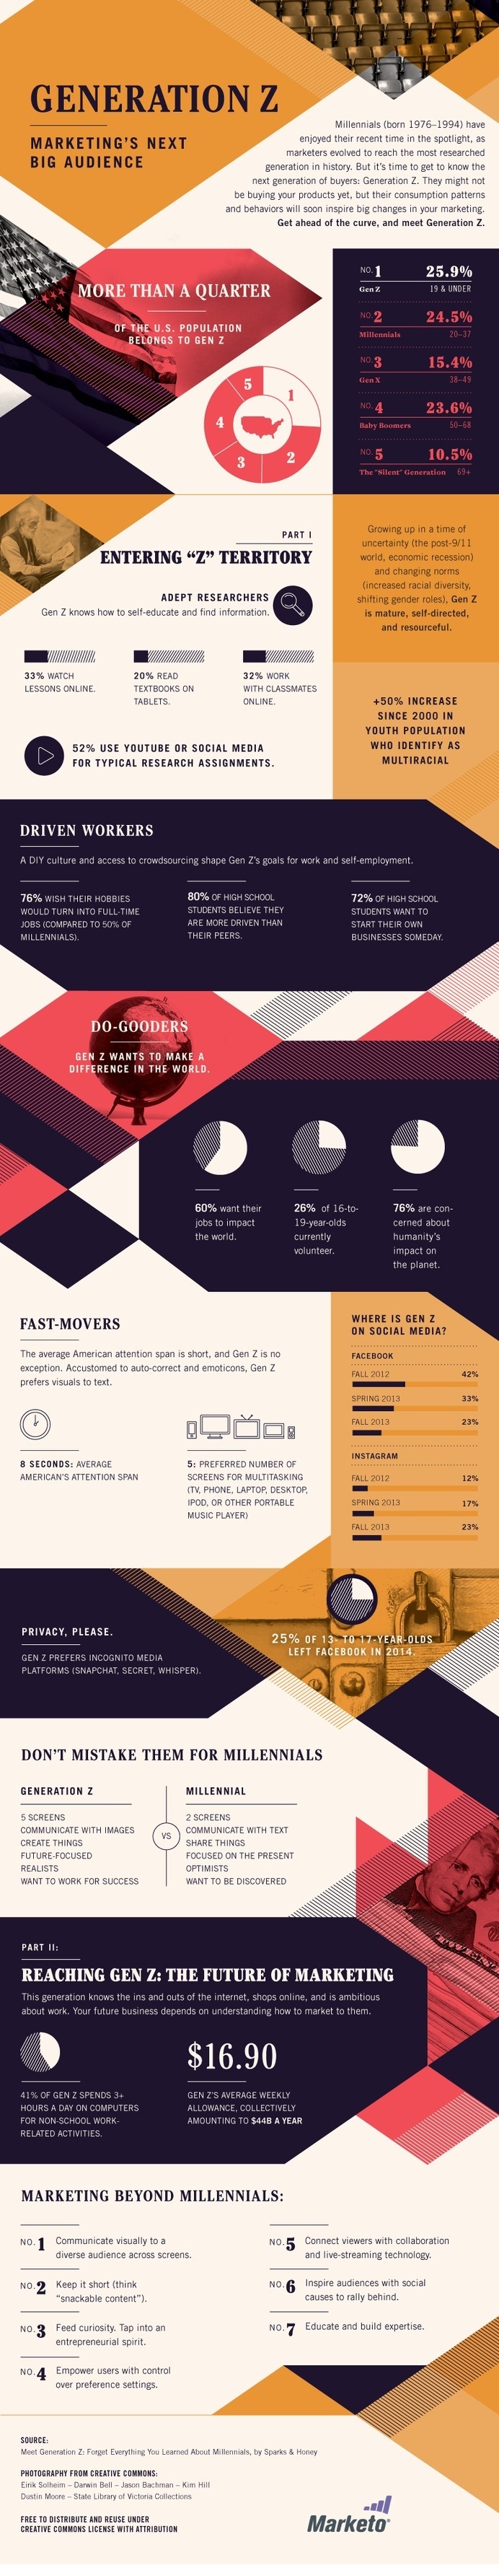 Meet Generation Z: Marketing's Next Big Audience [Infographic] #infographic #data #yellow